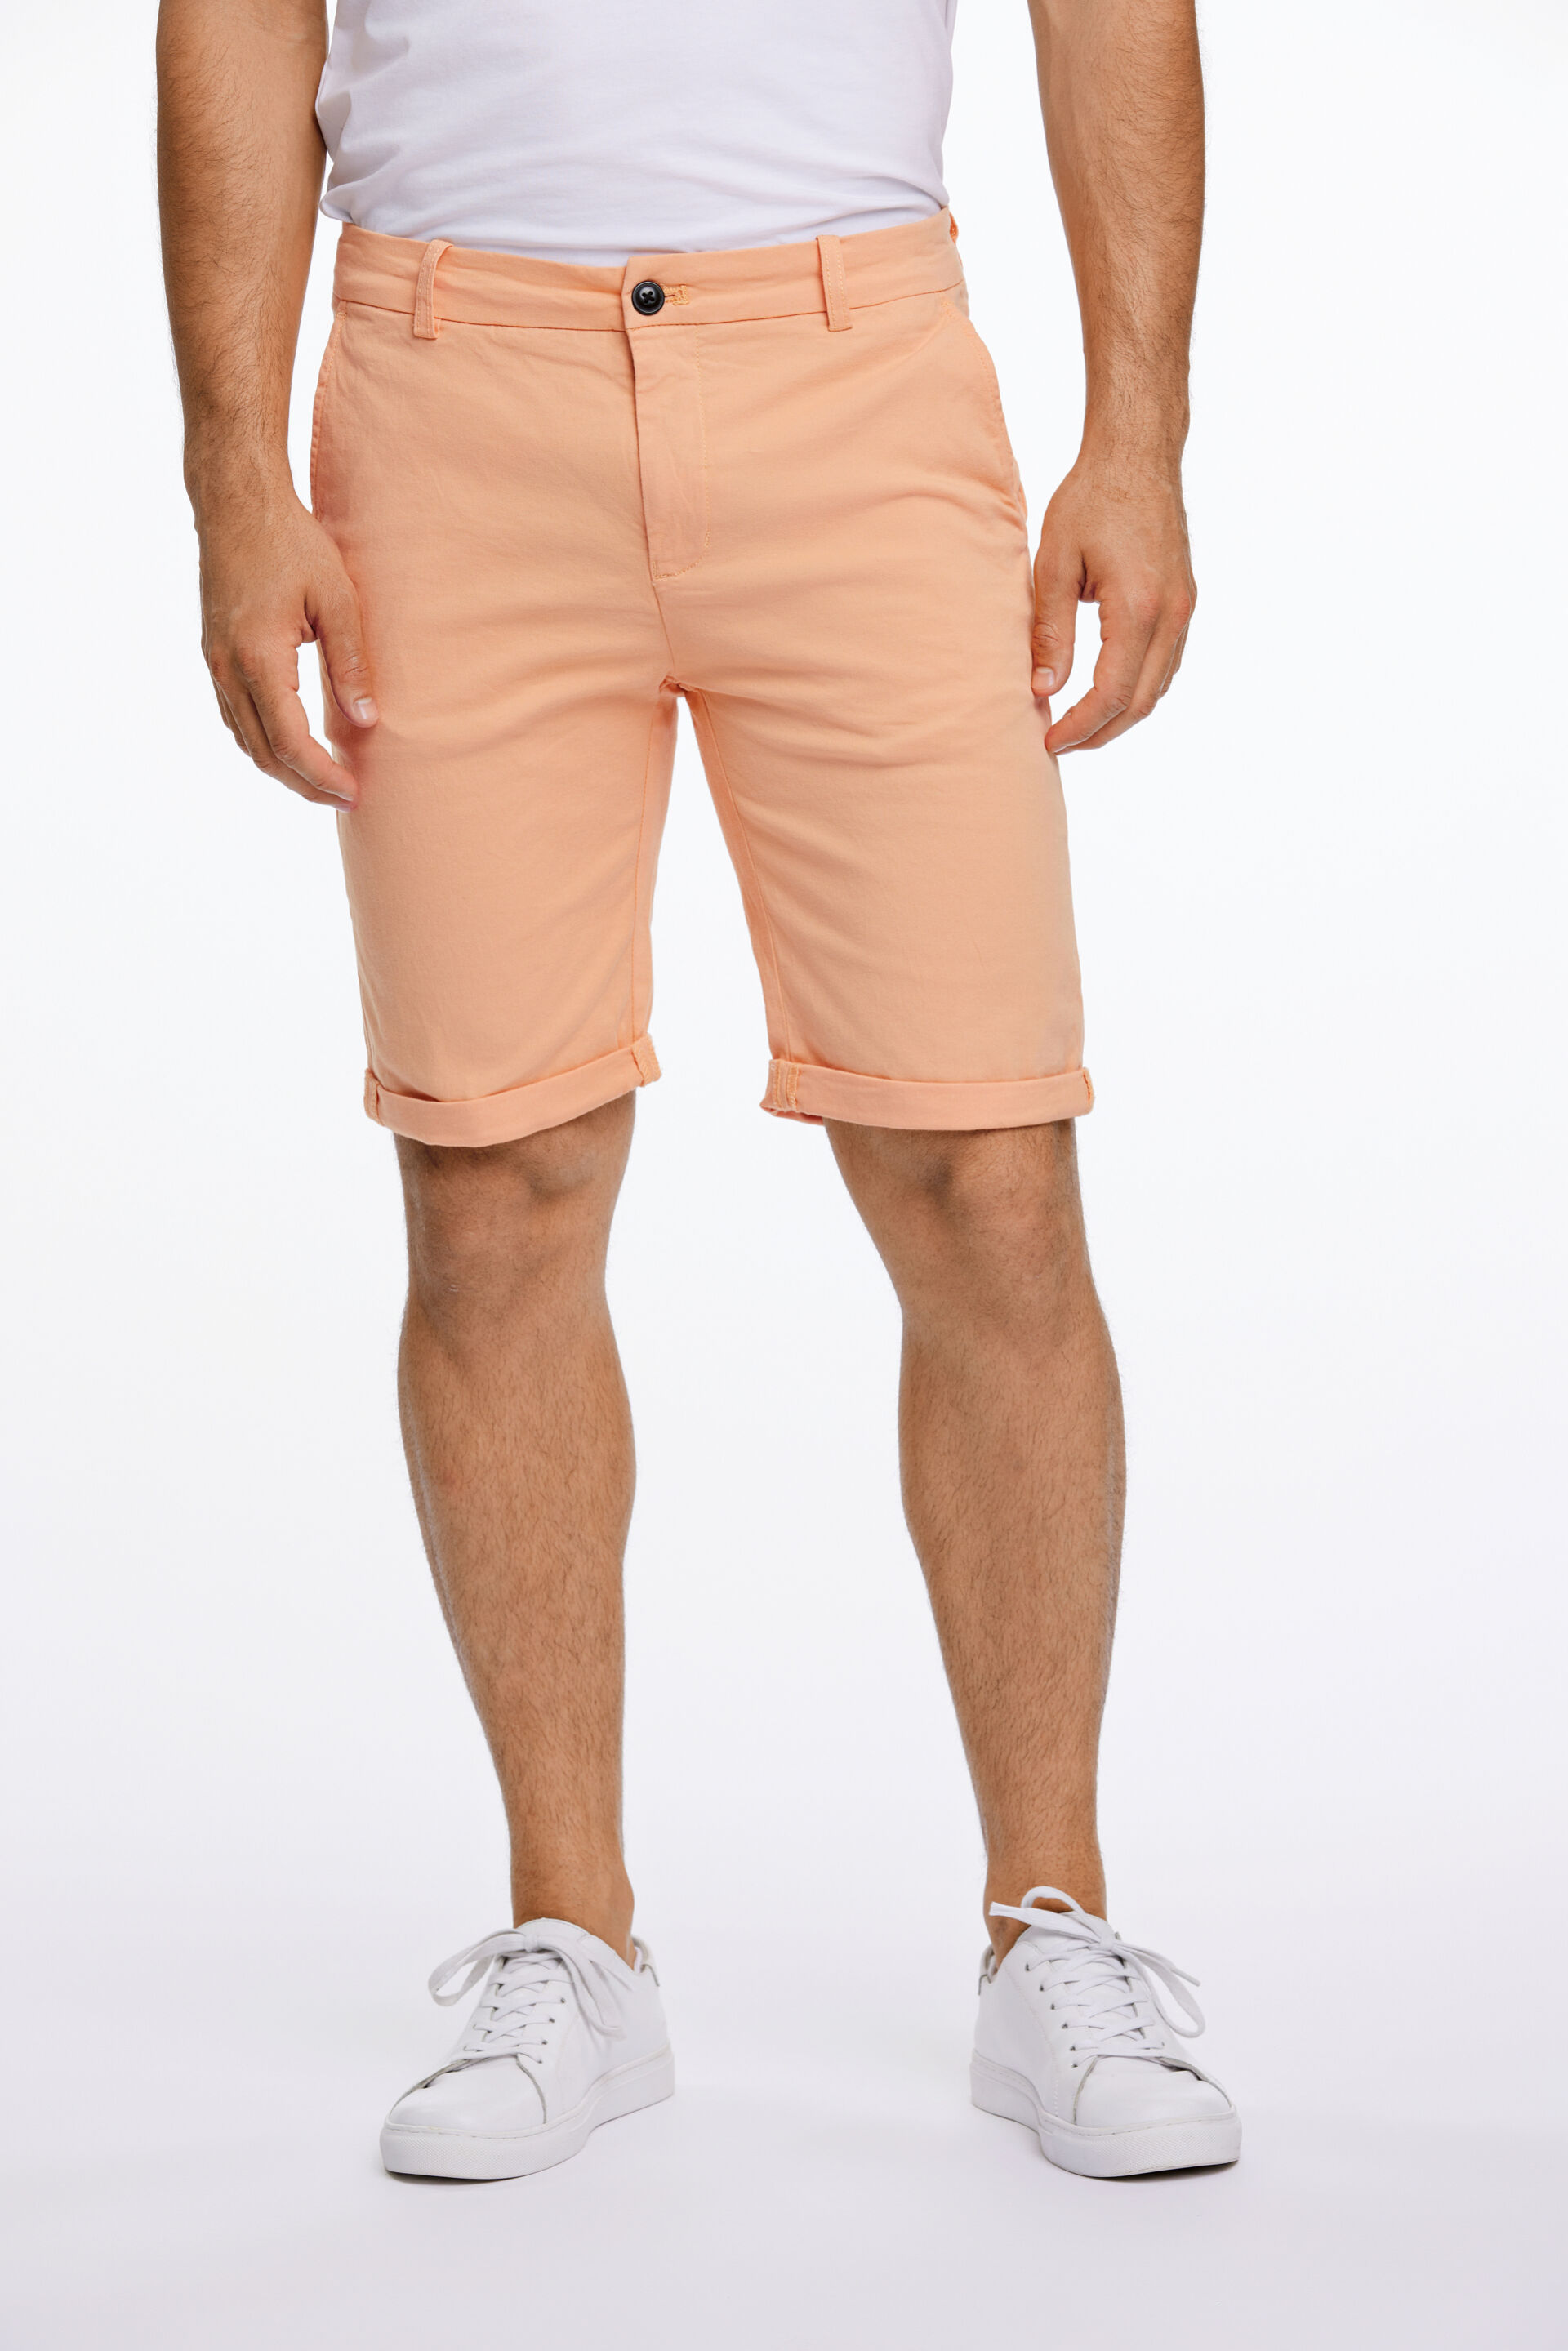 Lindbergh  Chino shorts Orange 30-505044